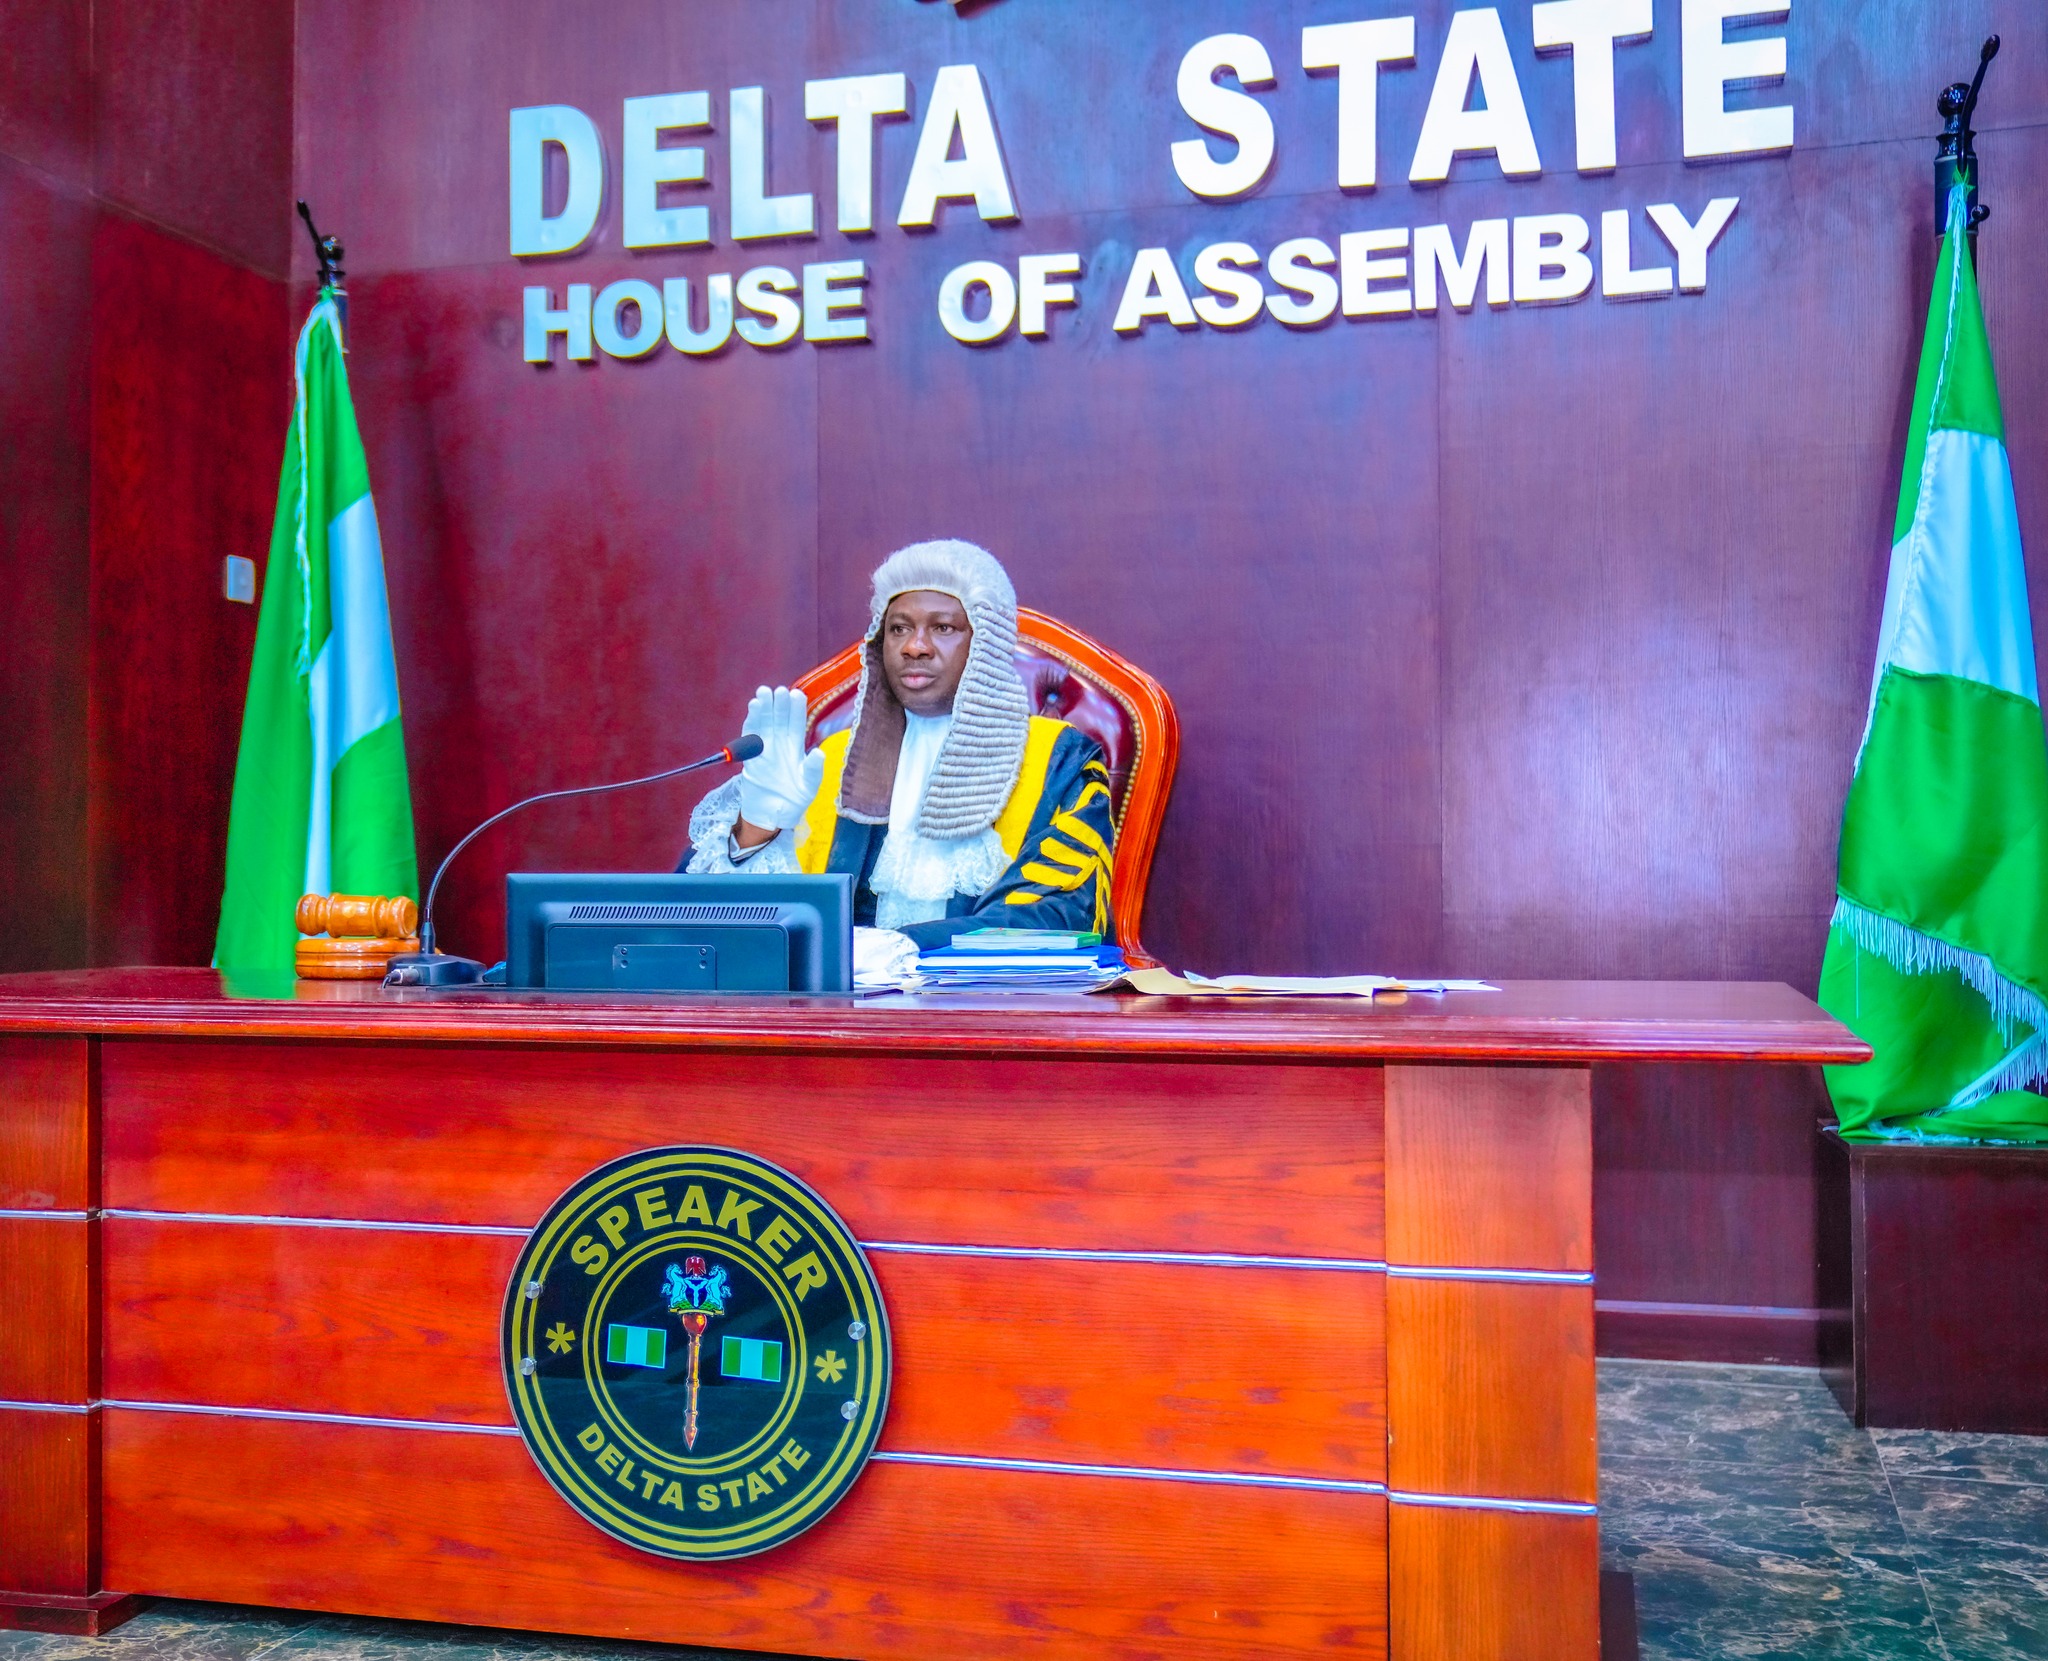 Speaker, Delta State House of Assembly, Rt. Hon. Emomotimi Guwor